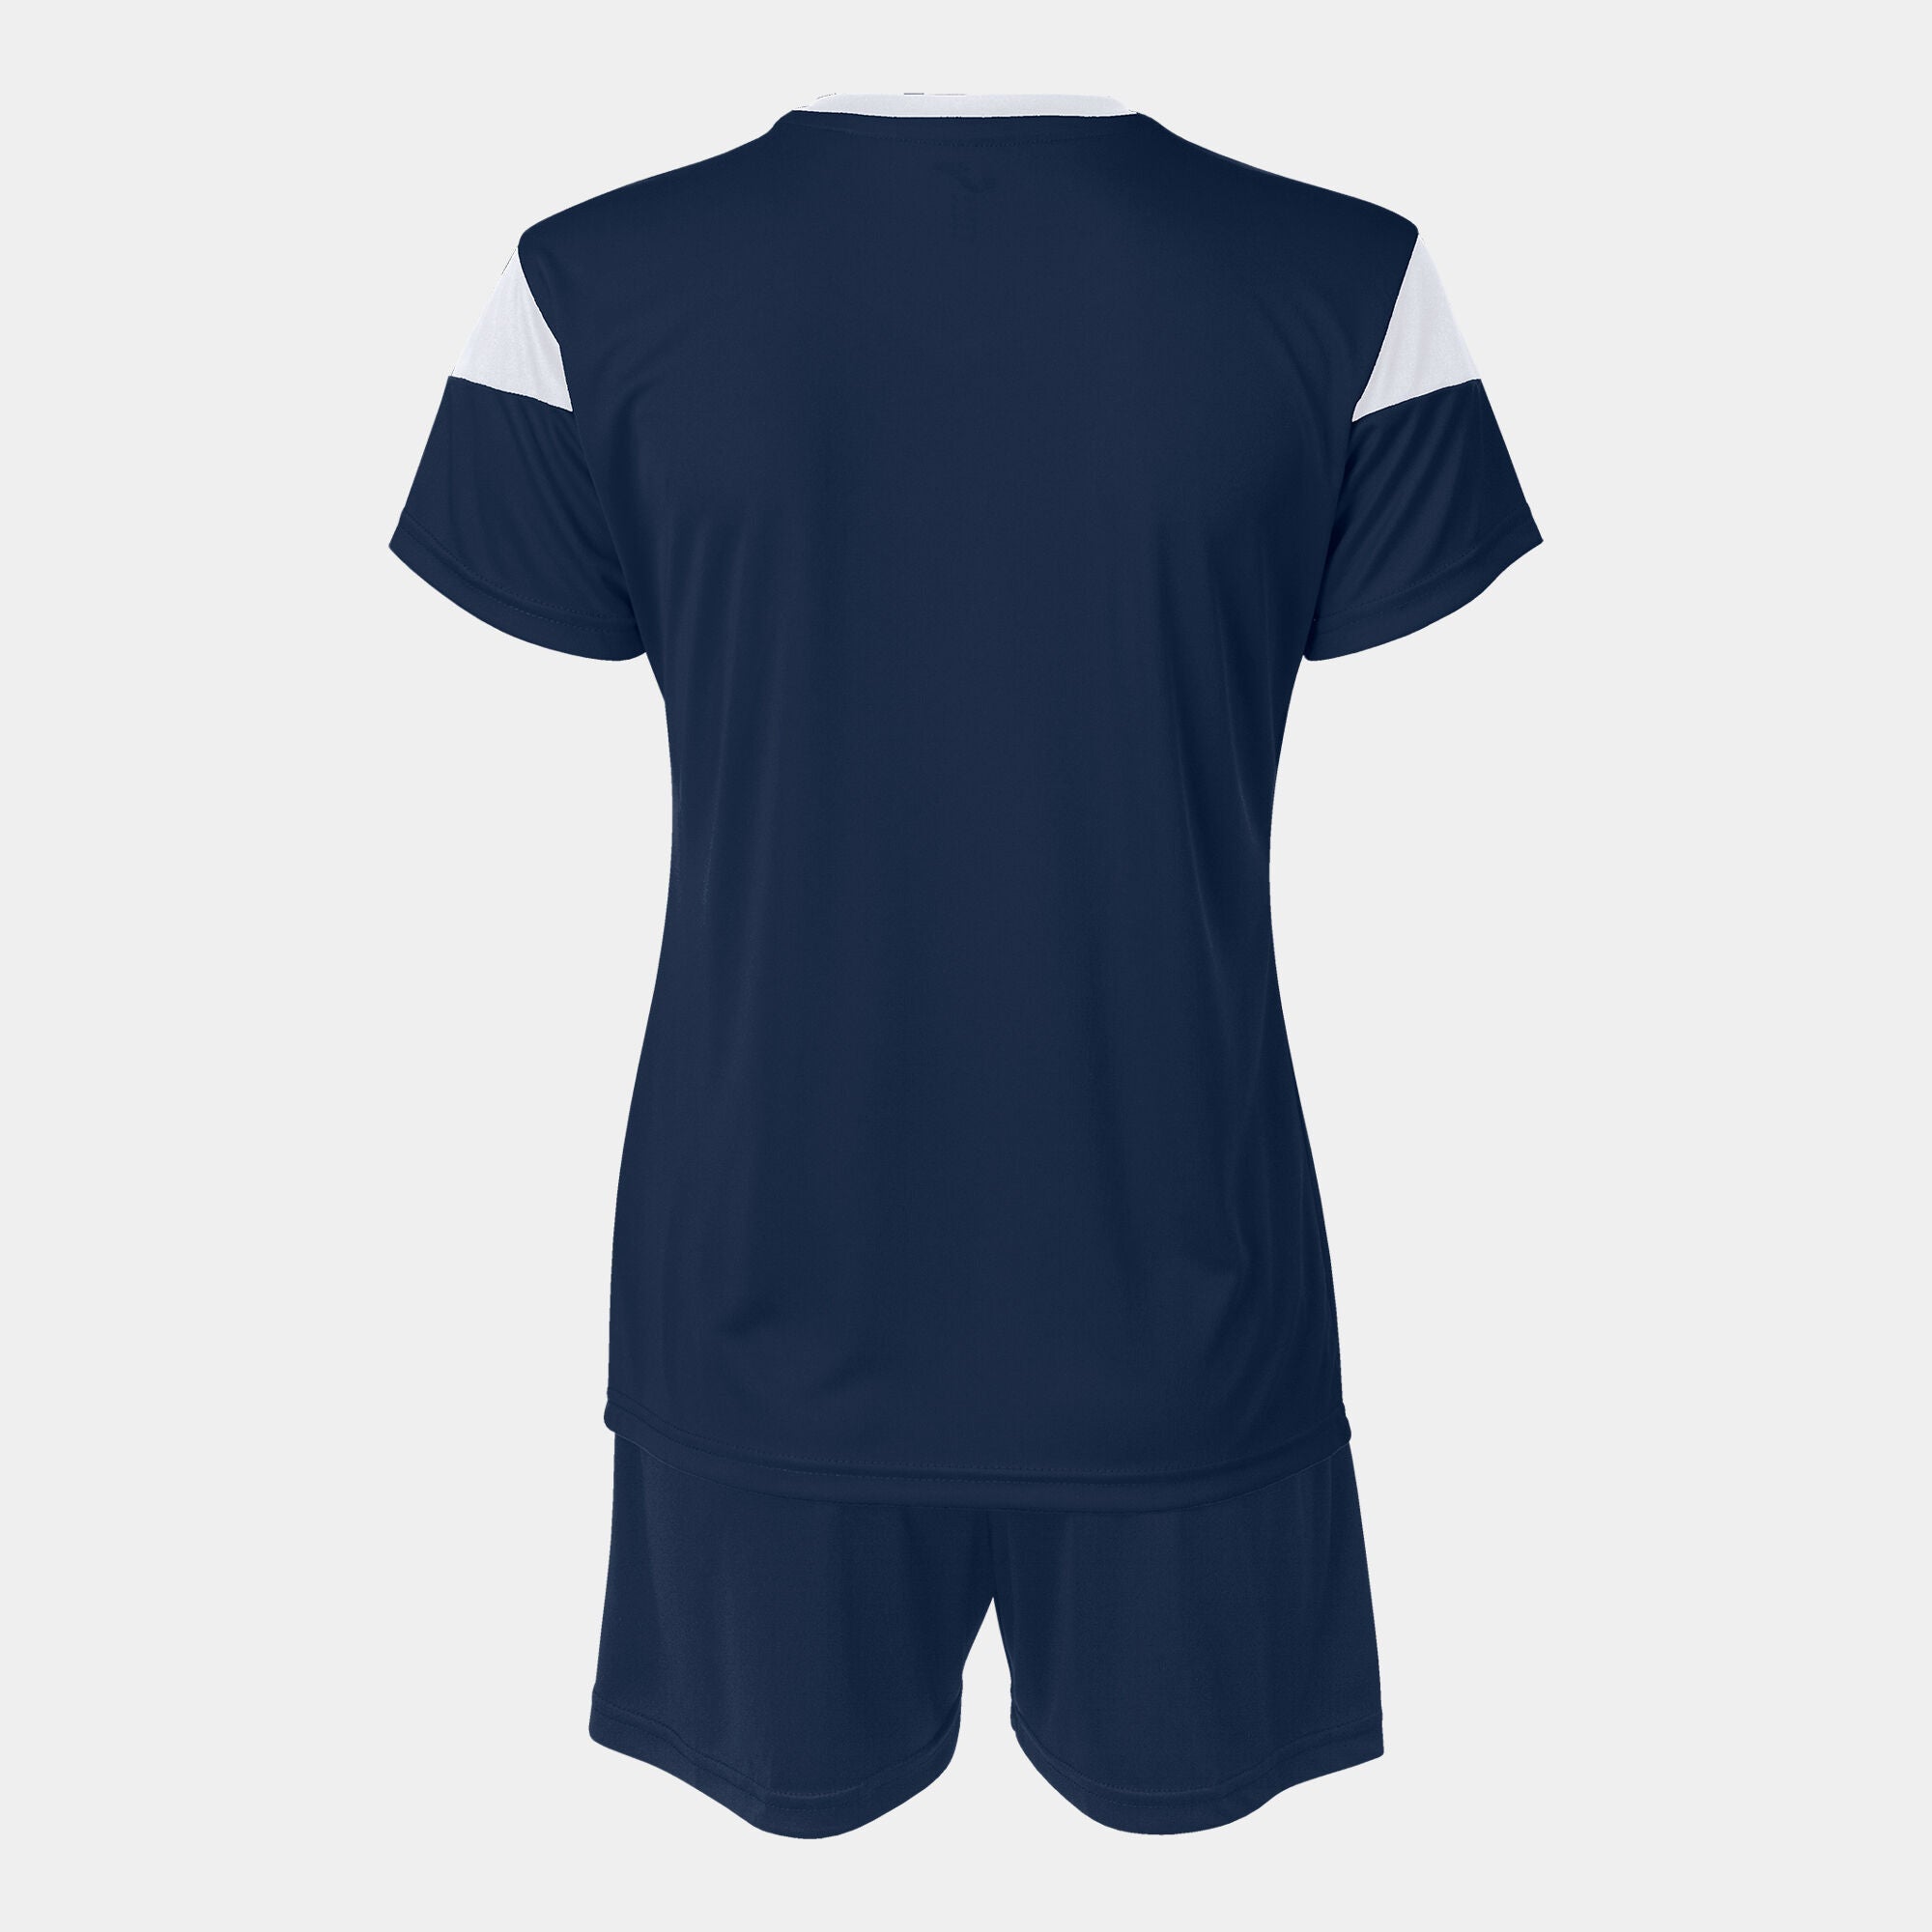 Joma Phoenix Activewear T-shirt & Short Set Ladies-2372-Navy White